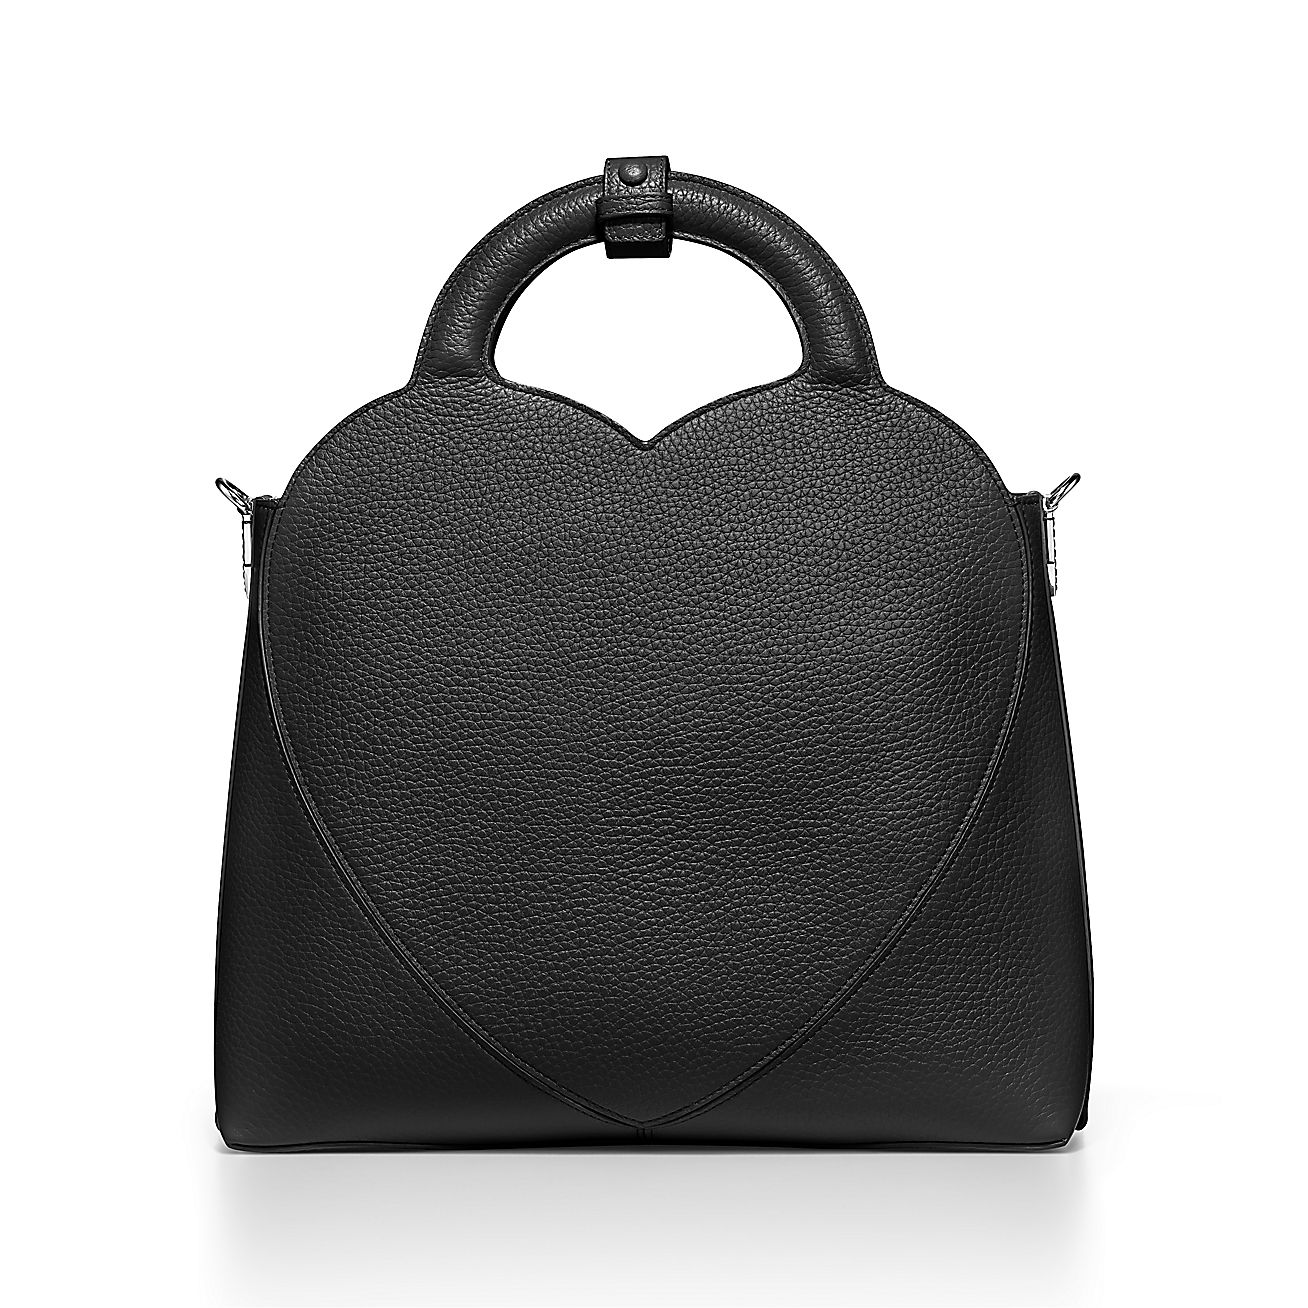 Tiffany&Co Black Scarf Purse Bag Tie Marry Me Heart Padlock Love Charms  Silk Bag